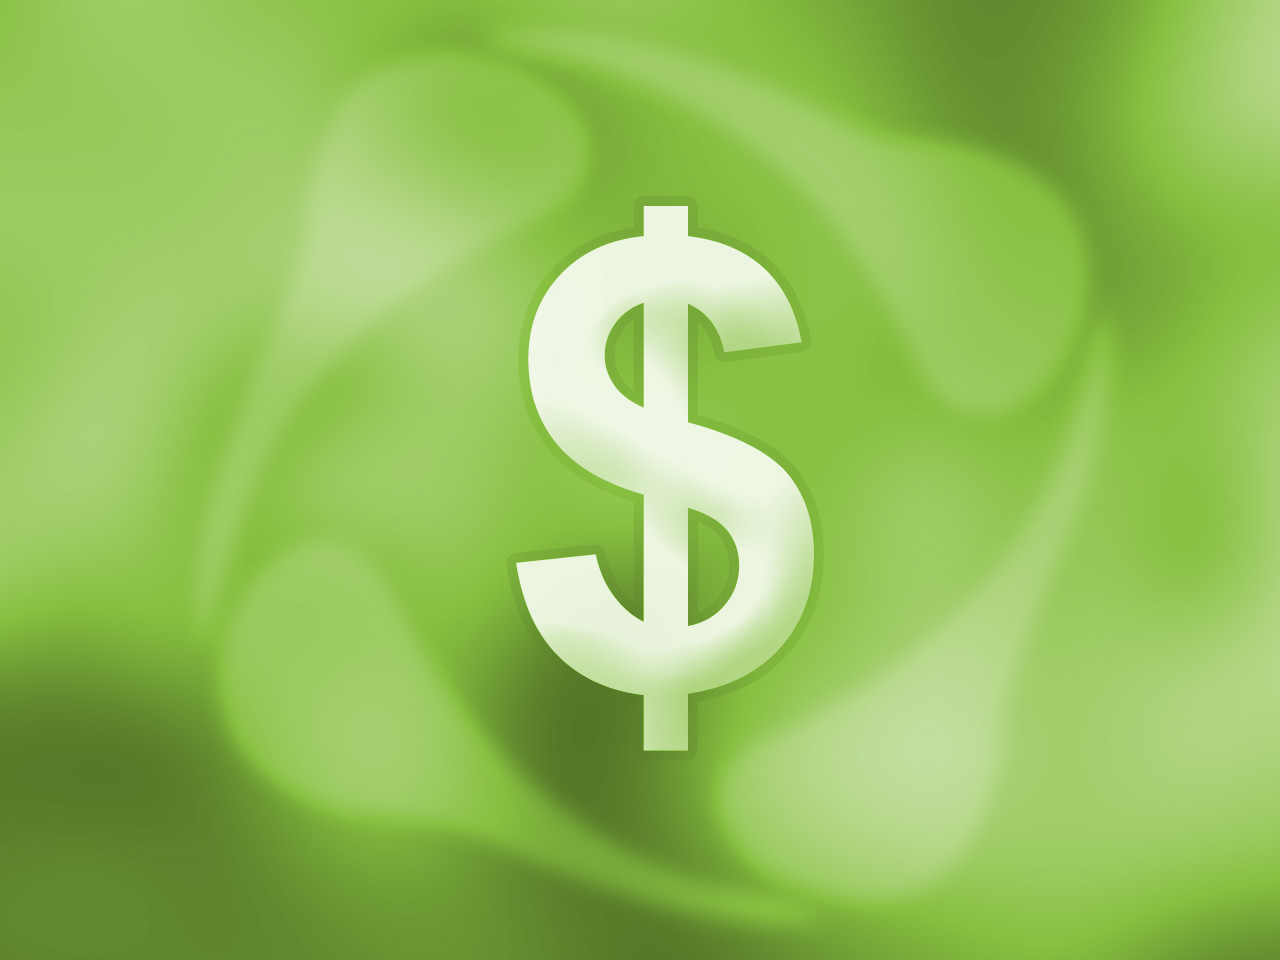 Dollar symbol on green background